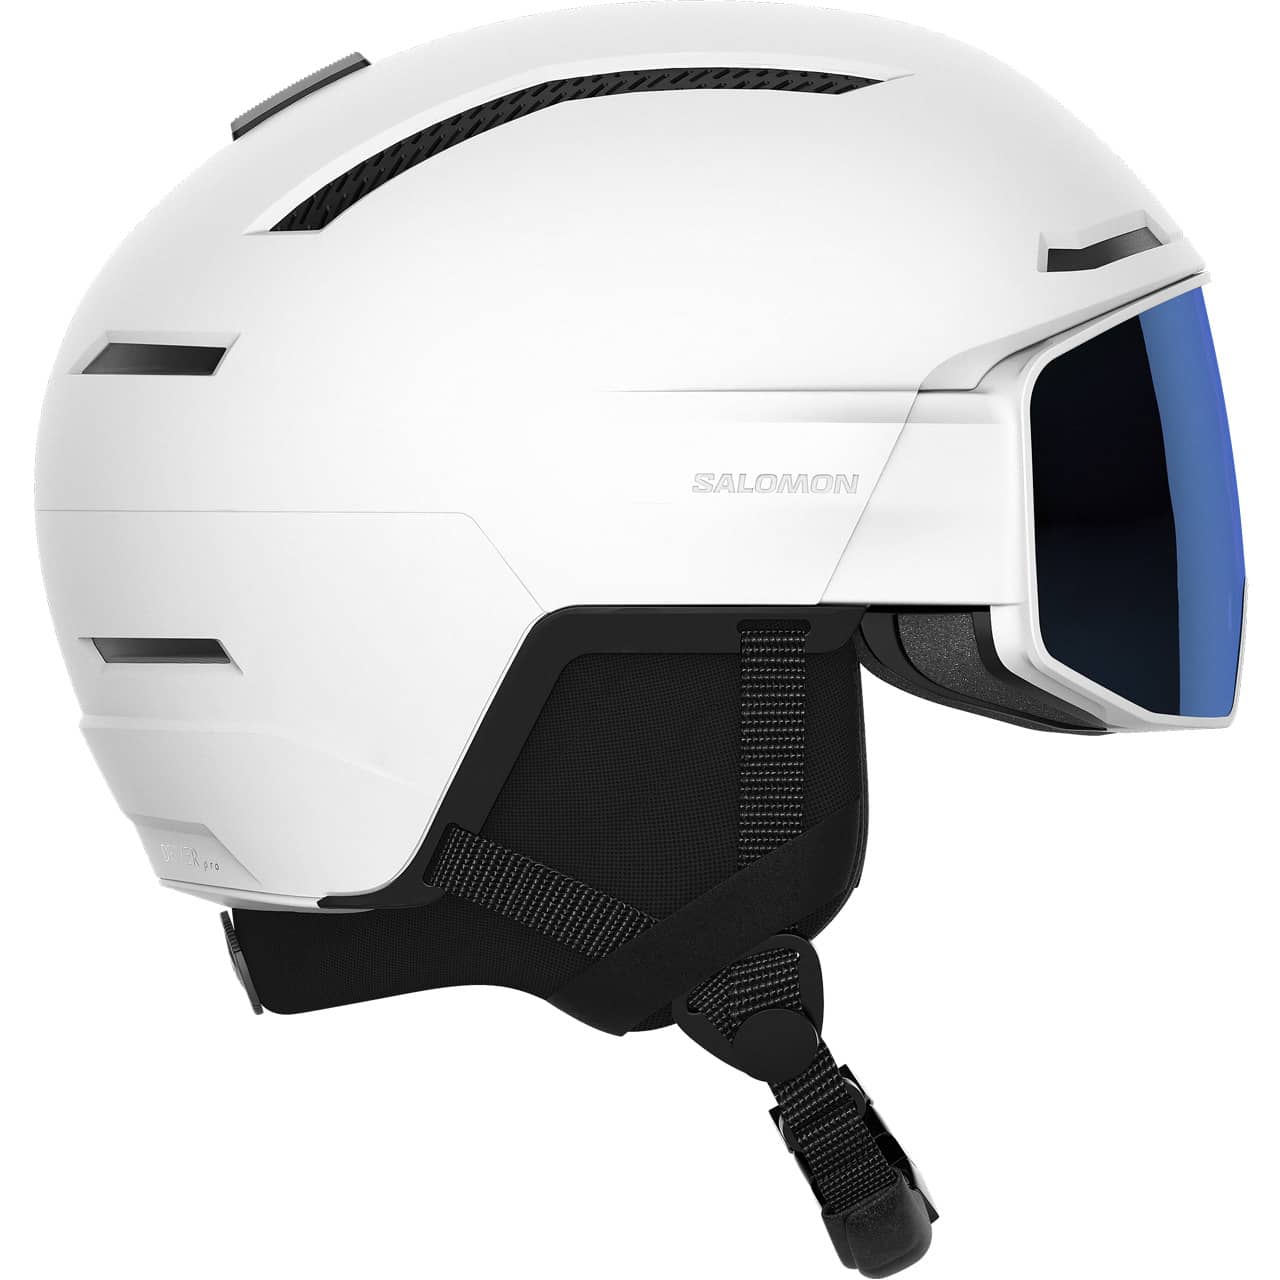 Salomon Pro Mips white Sigma sky blue |Salomon Helmets | Salomon S | BRANDS | XSPO.com